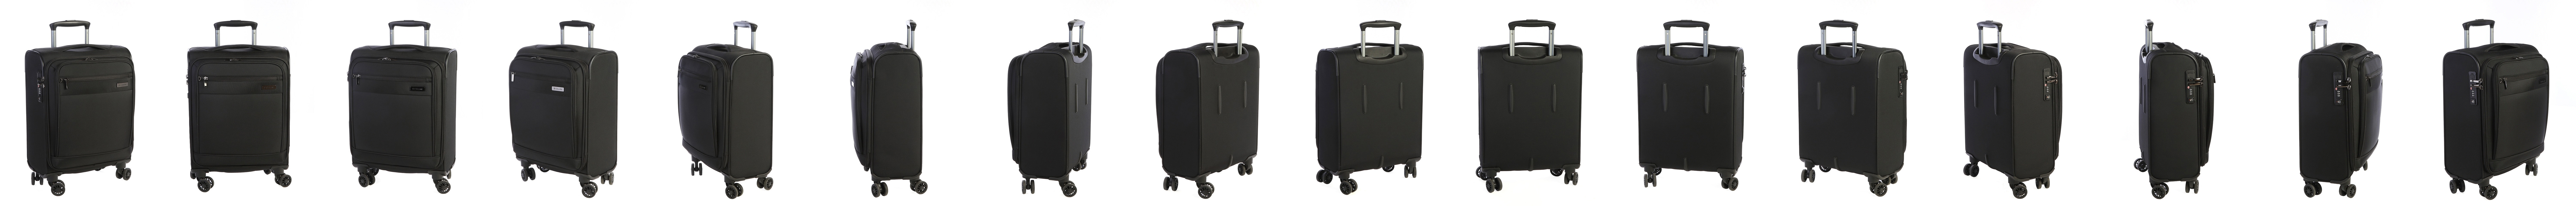 cellini luggage prices